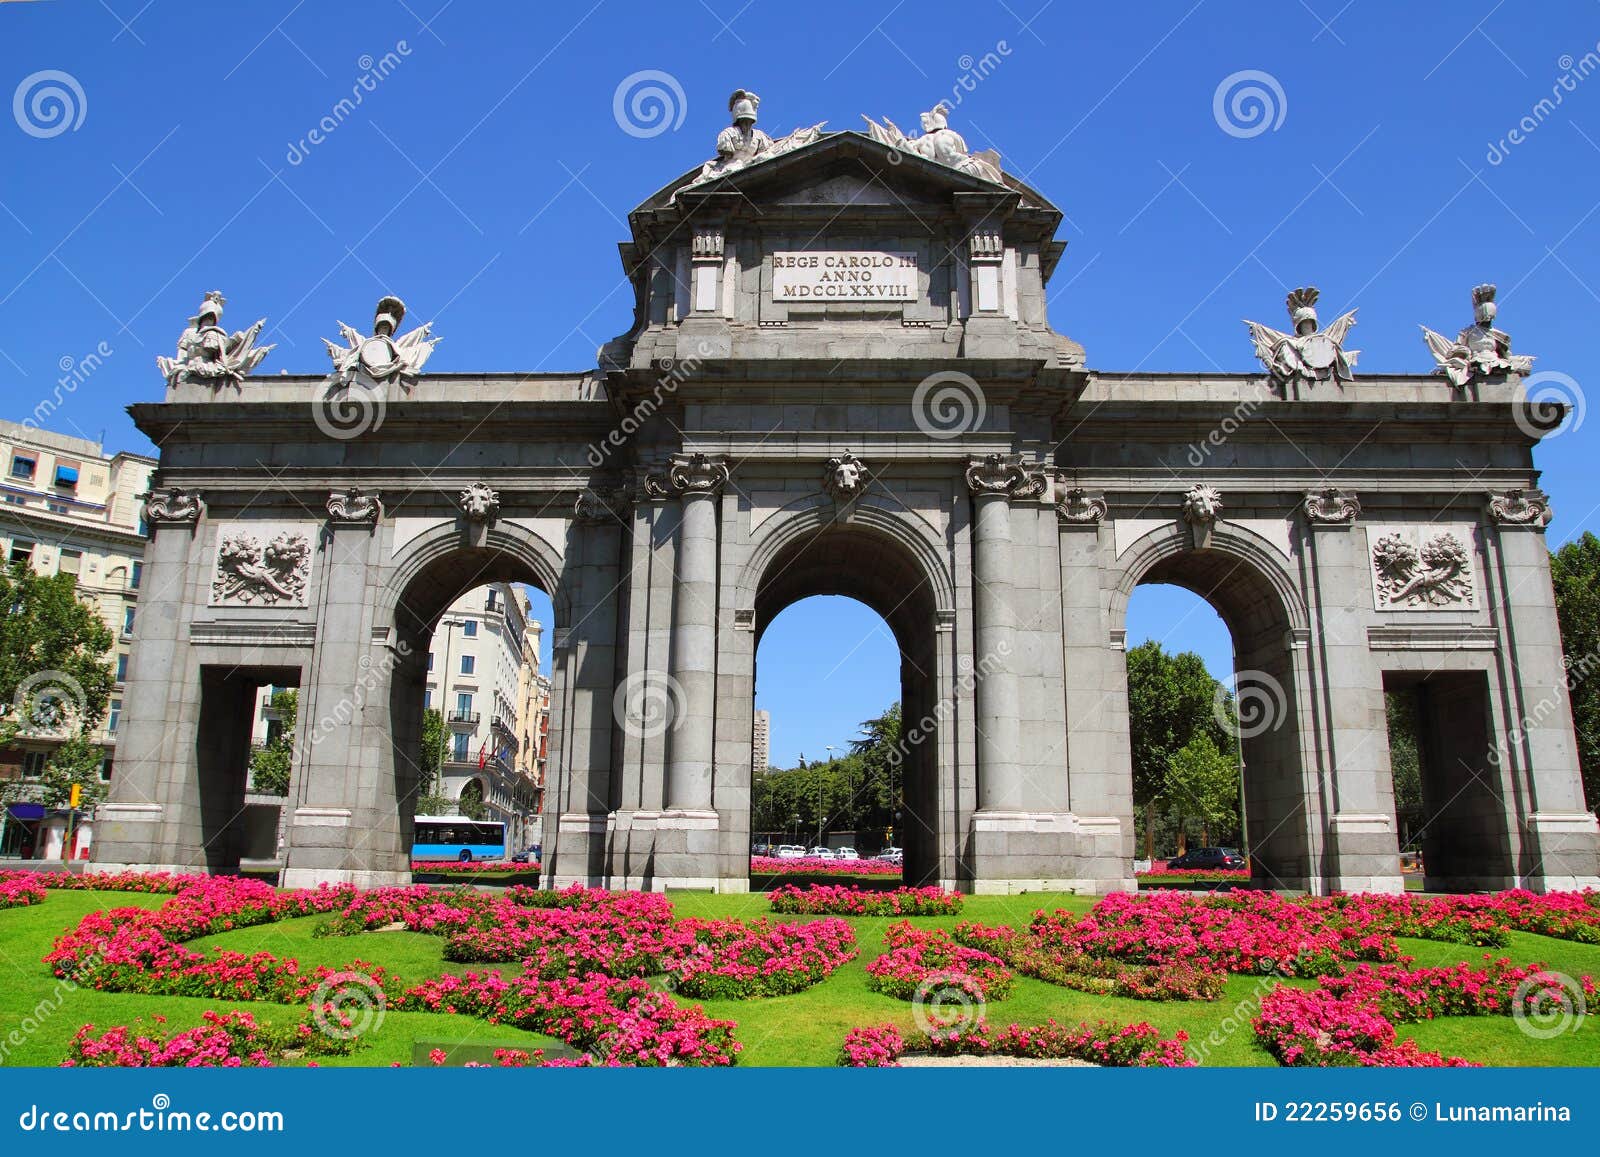 madrid puerta de alcala with flower gardens